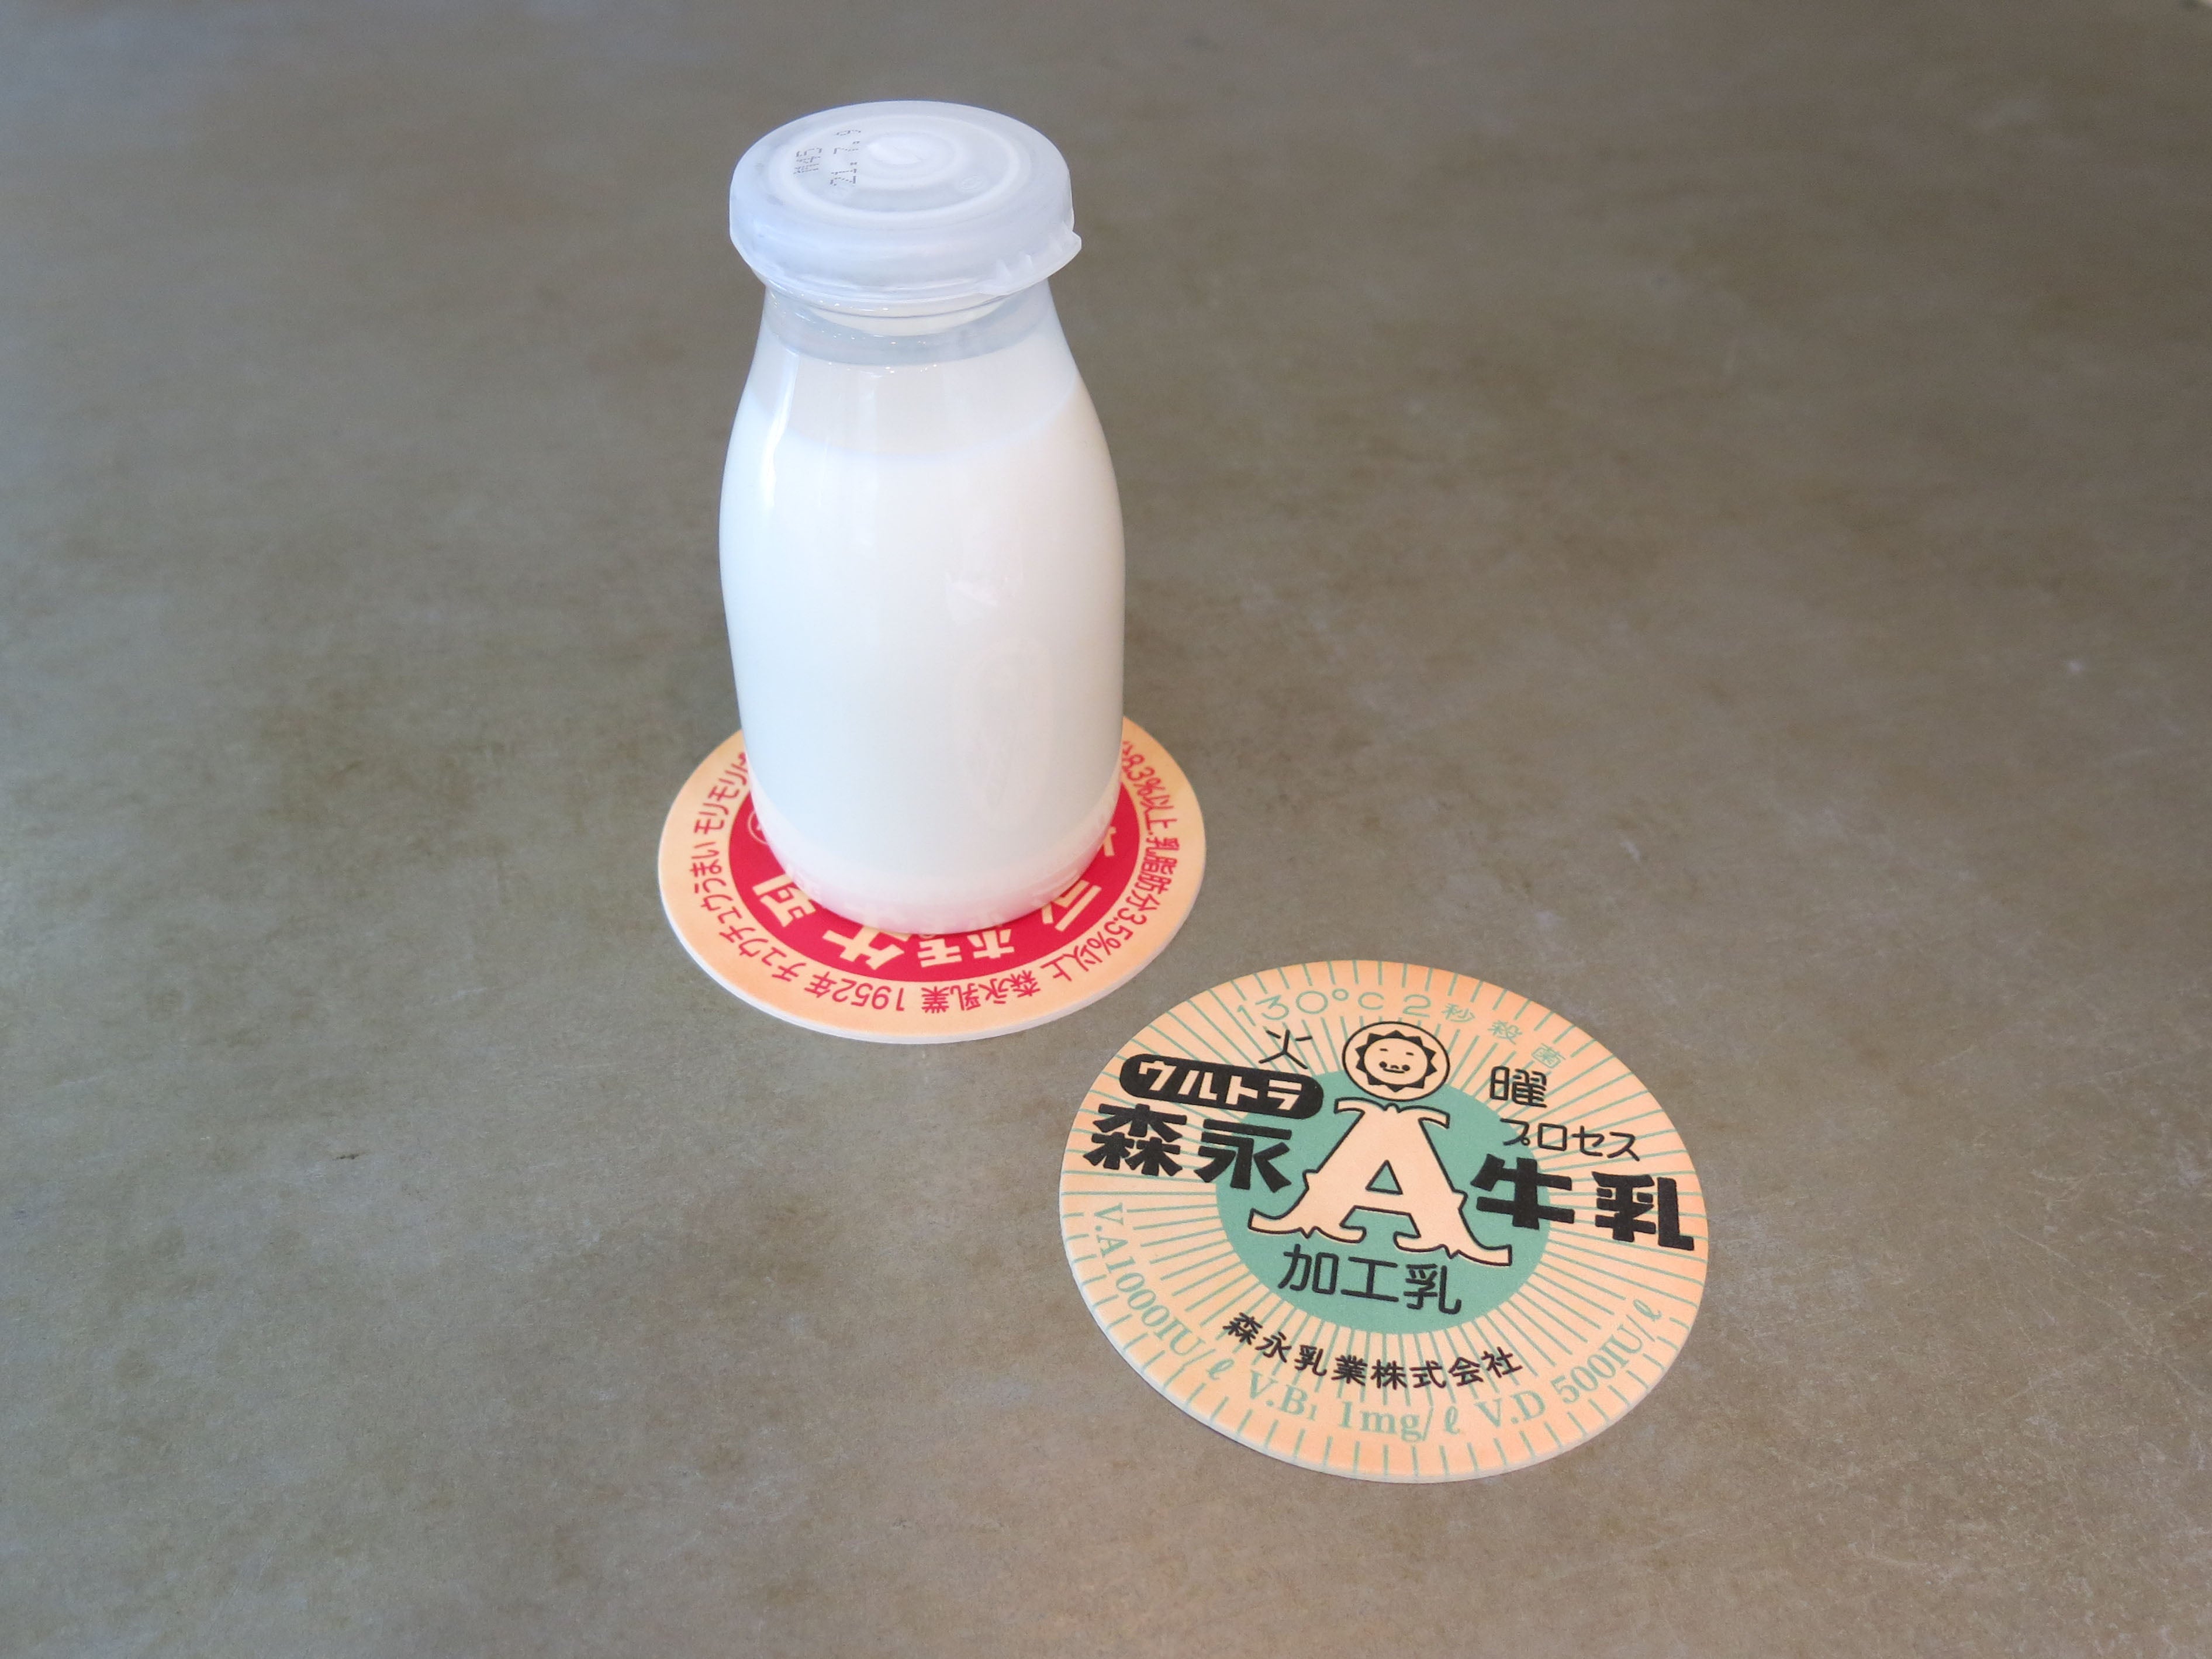 Set of 2 coasters with Morinaga milk bottle lid design